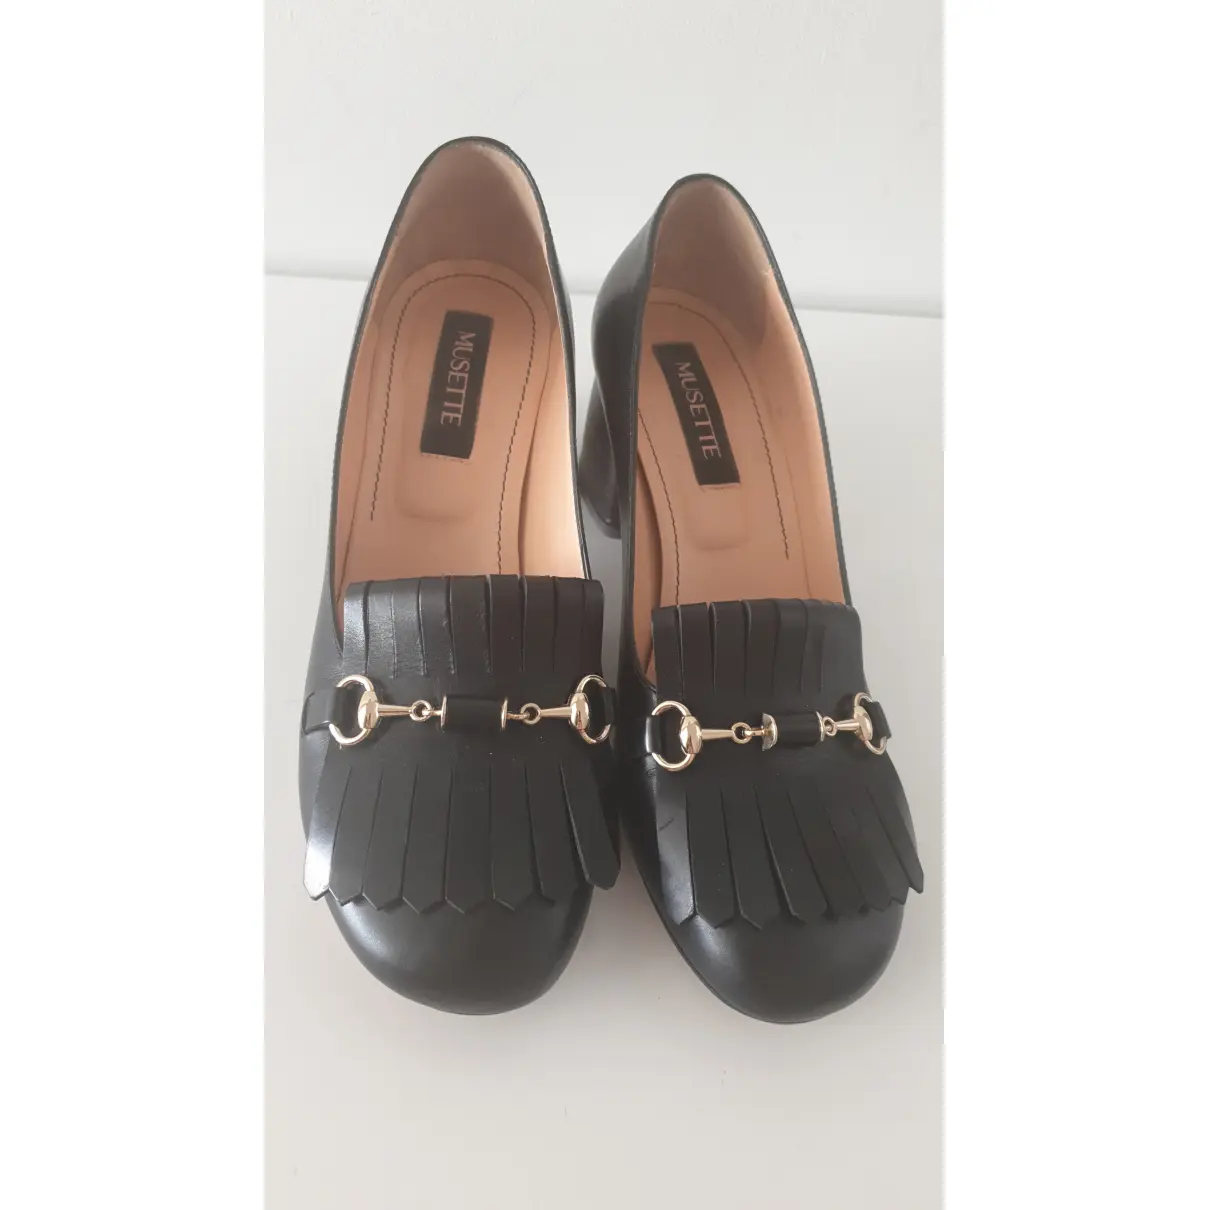 Buy MUSETTE Leather heels online